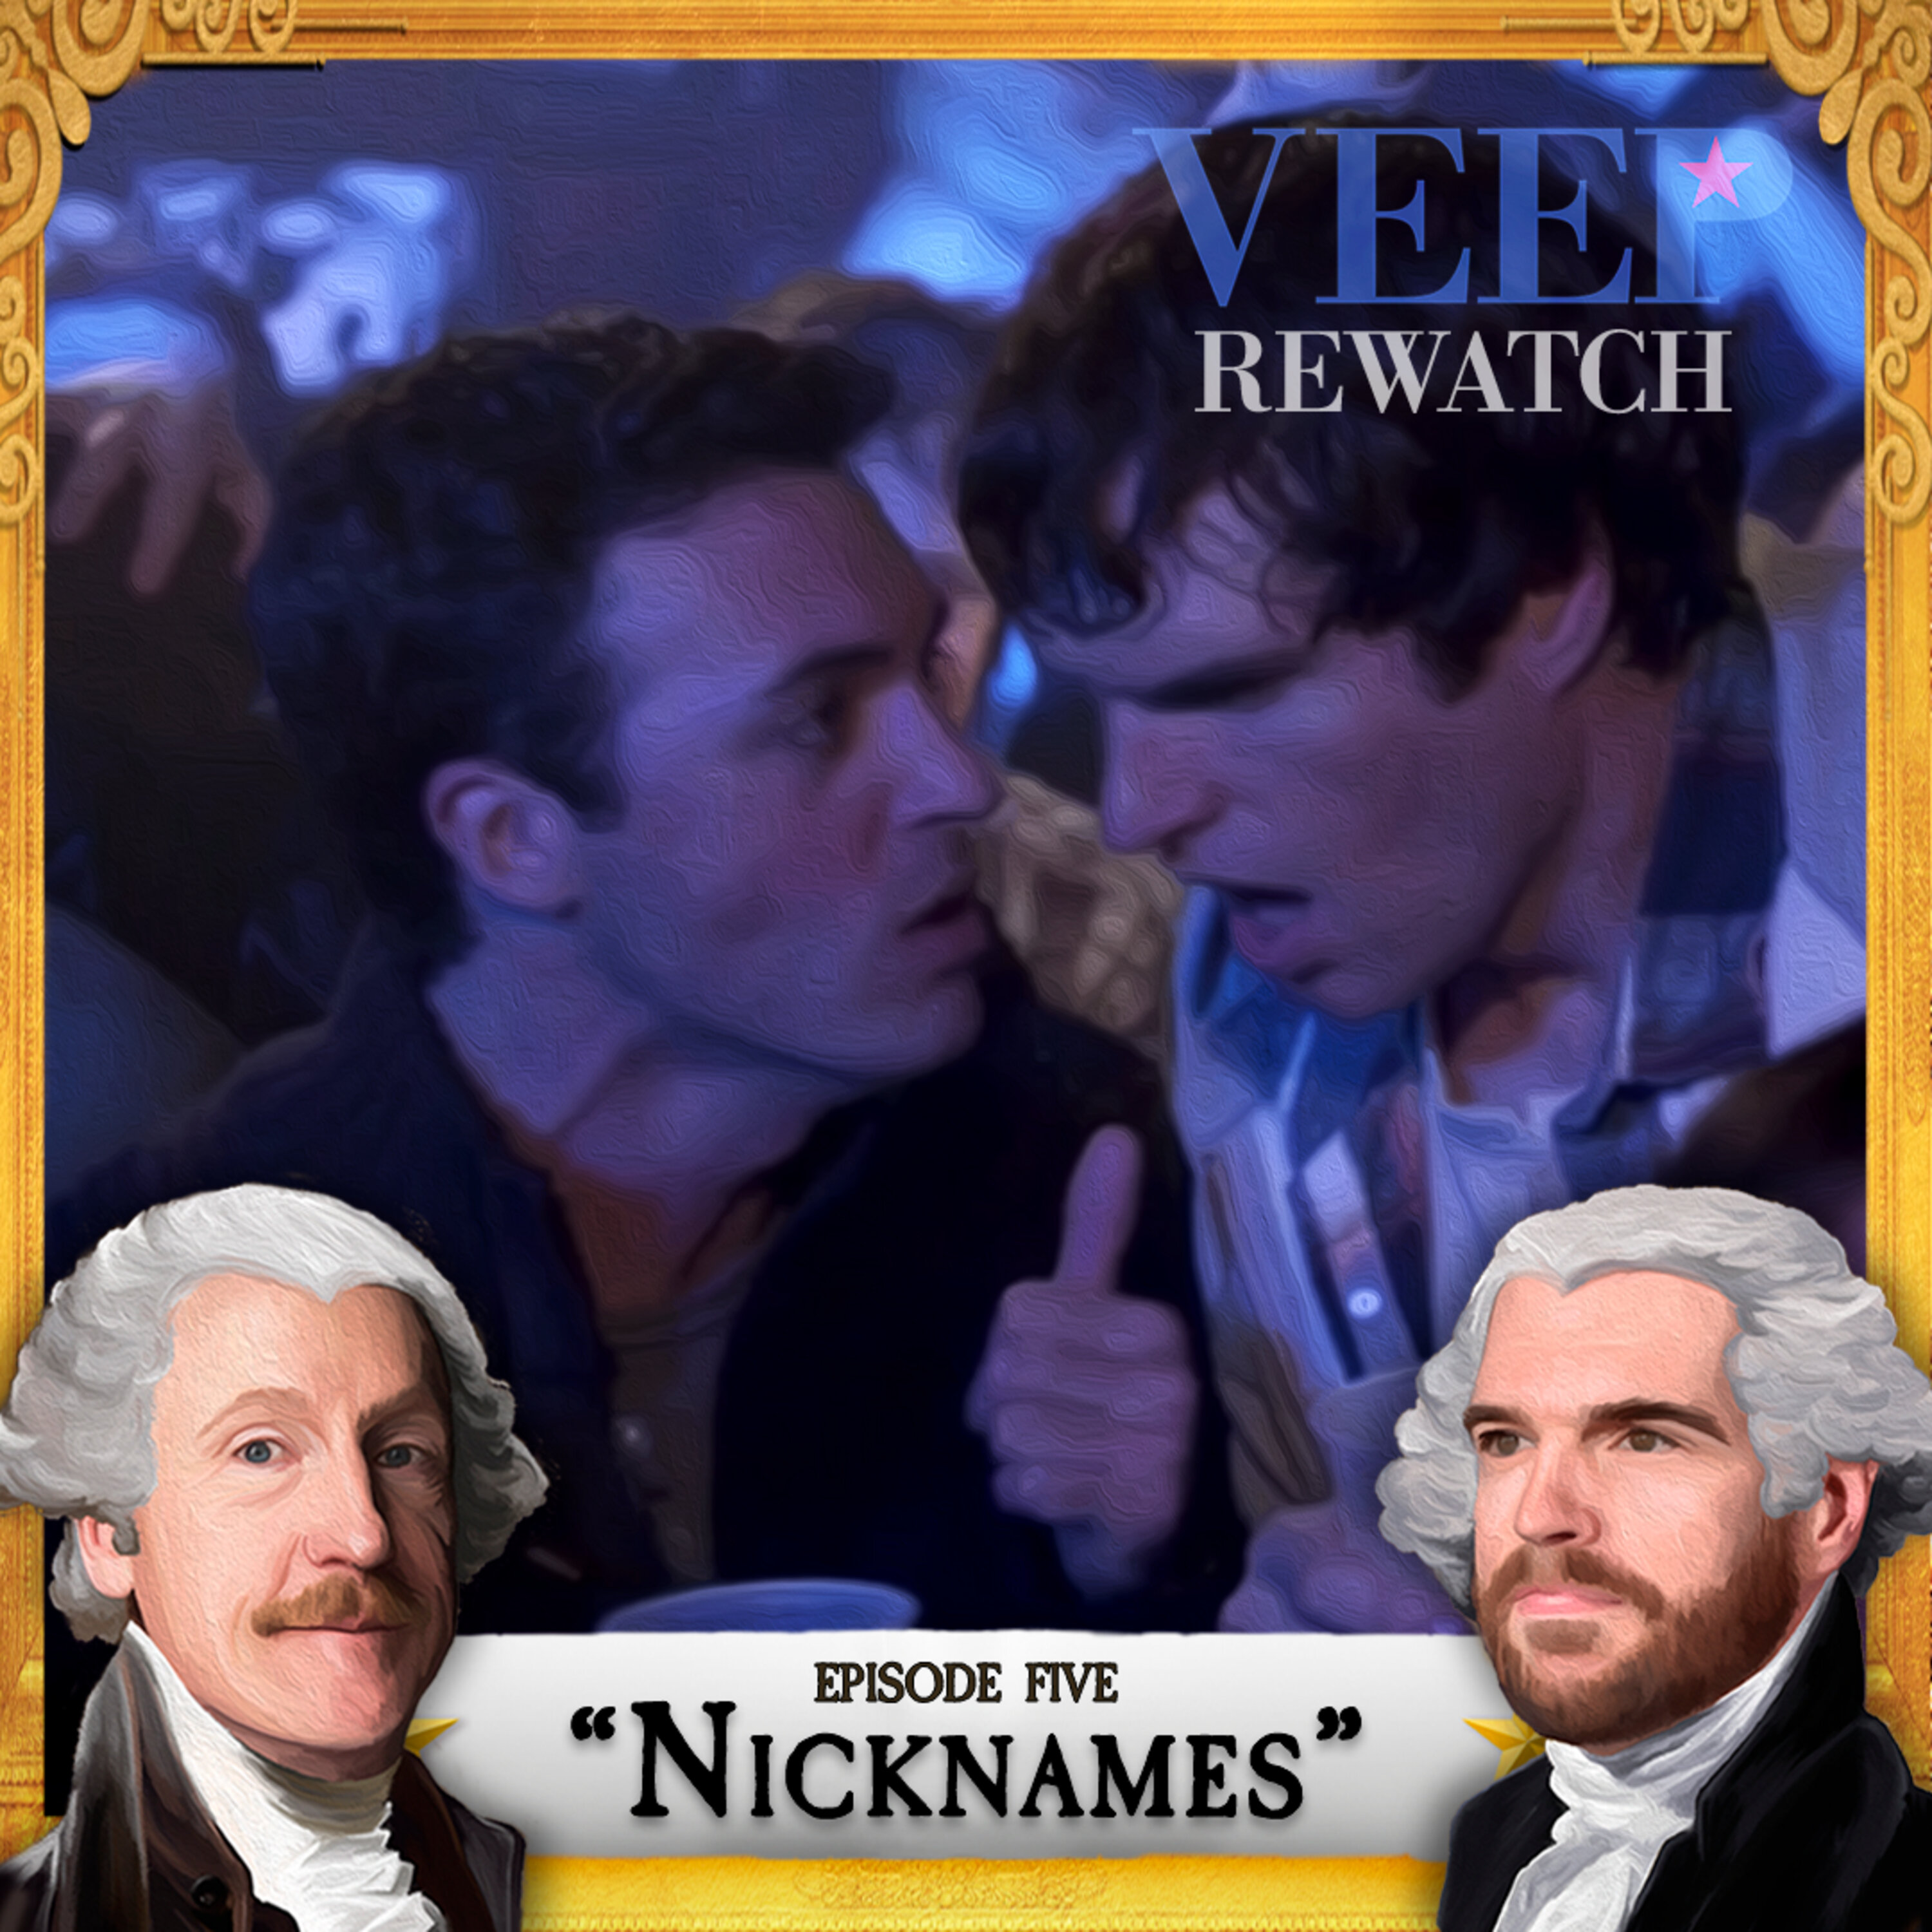 Reid Scott | “Nicknames” (S1E5) Veep Rewatch with Matt and Tim